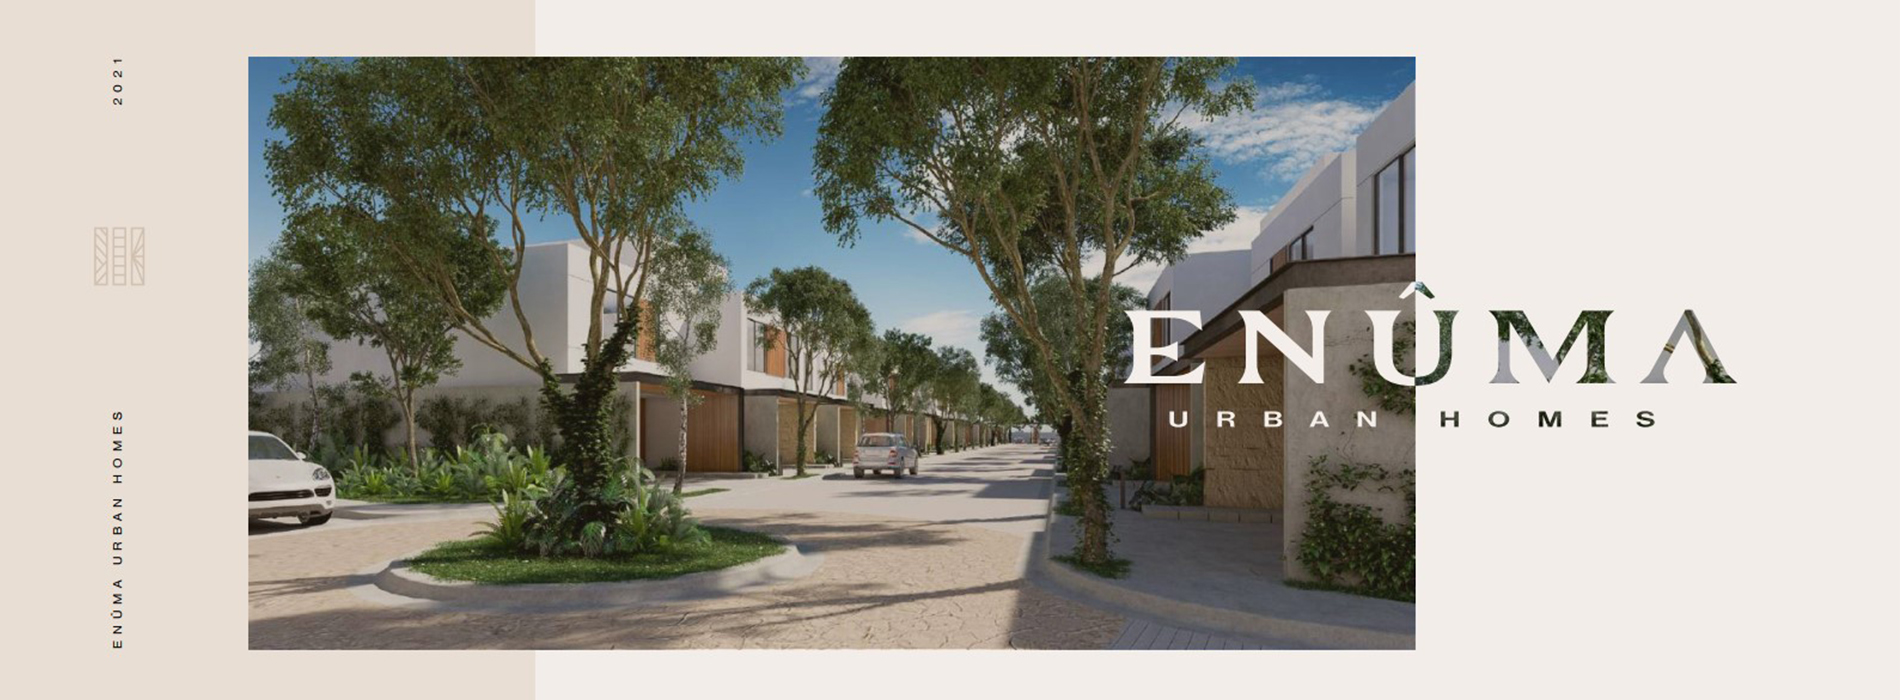 Enuma Urban Homes Goodlers